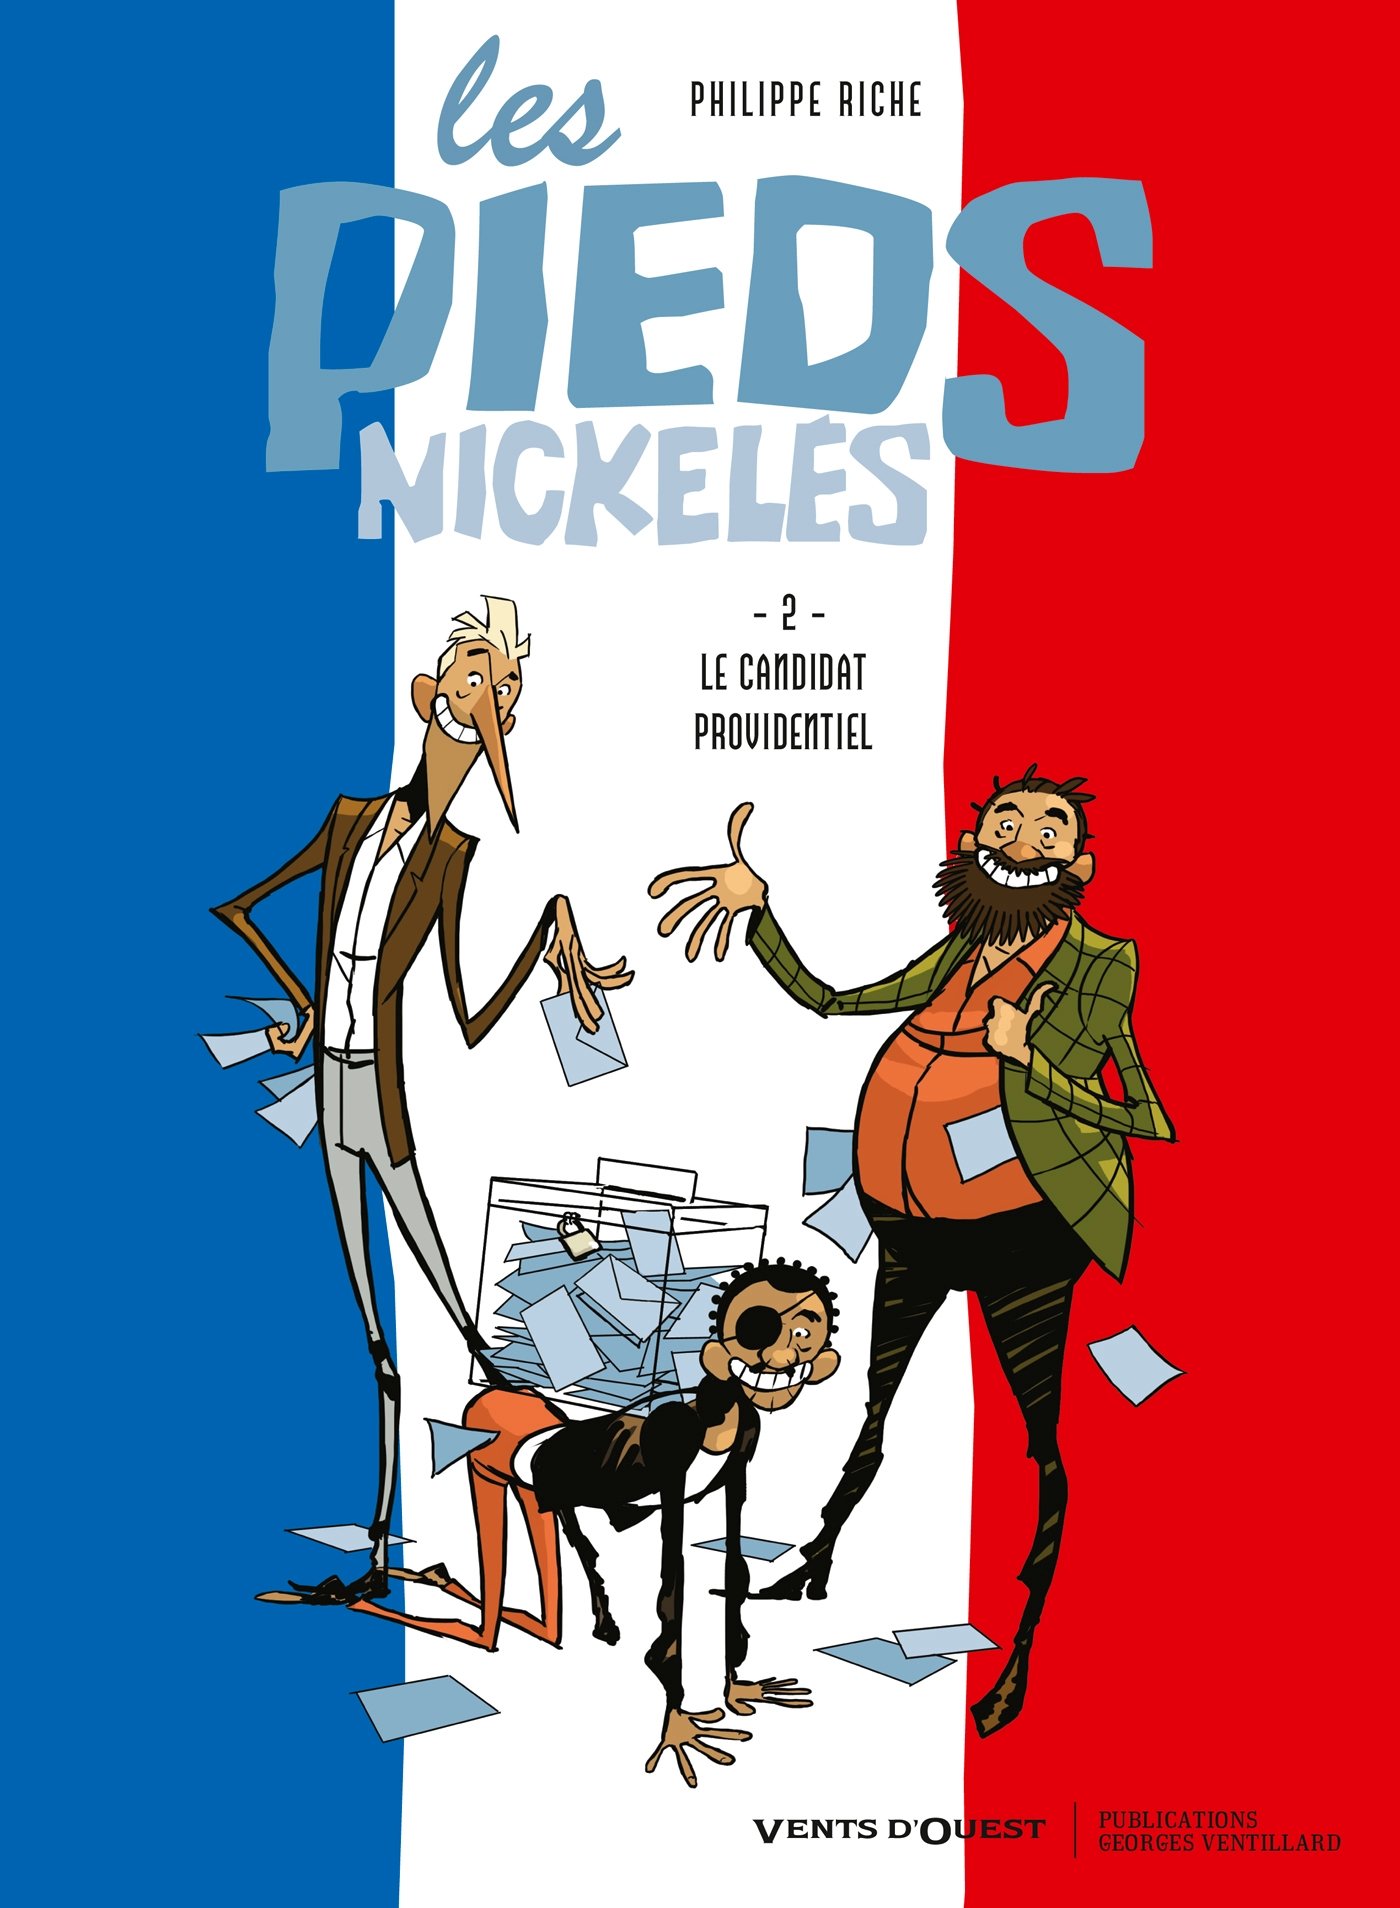 Les Pieds nickeles | Philippe Riche, Patricia Souchar